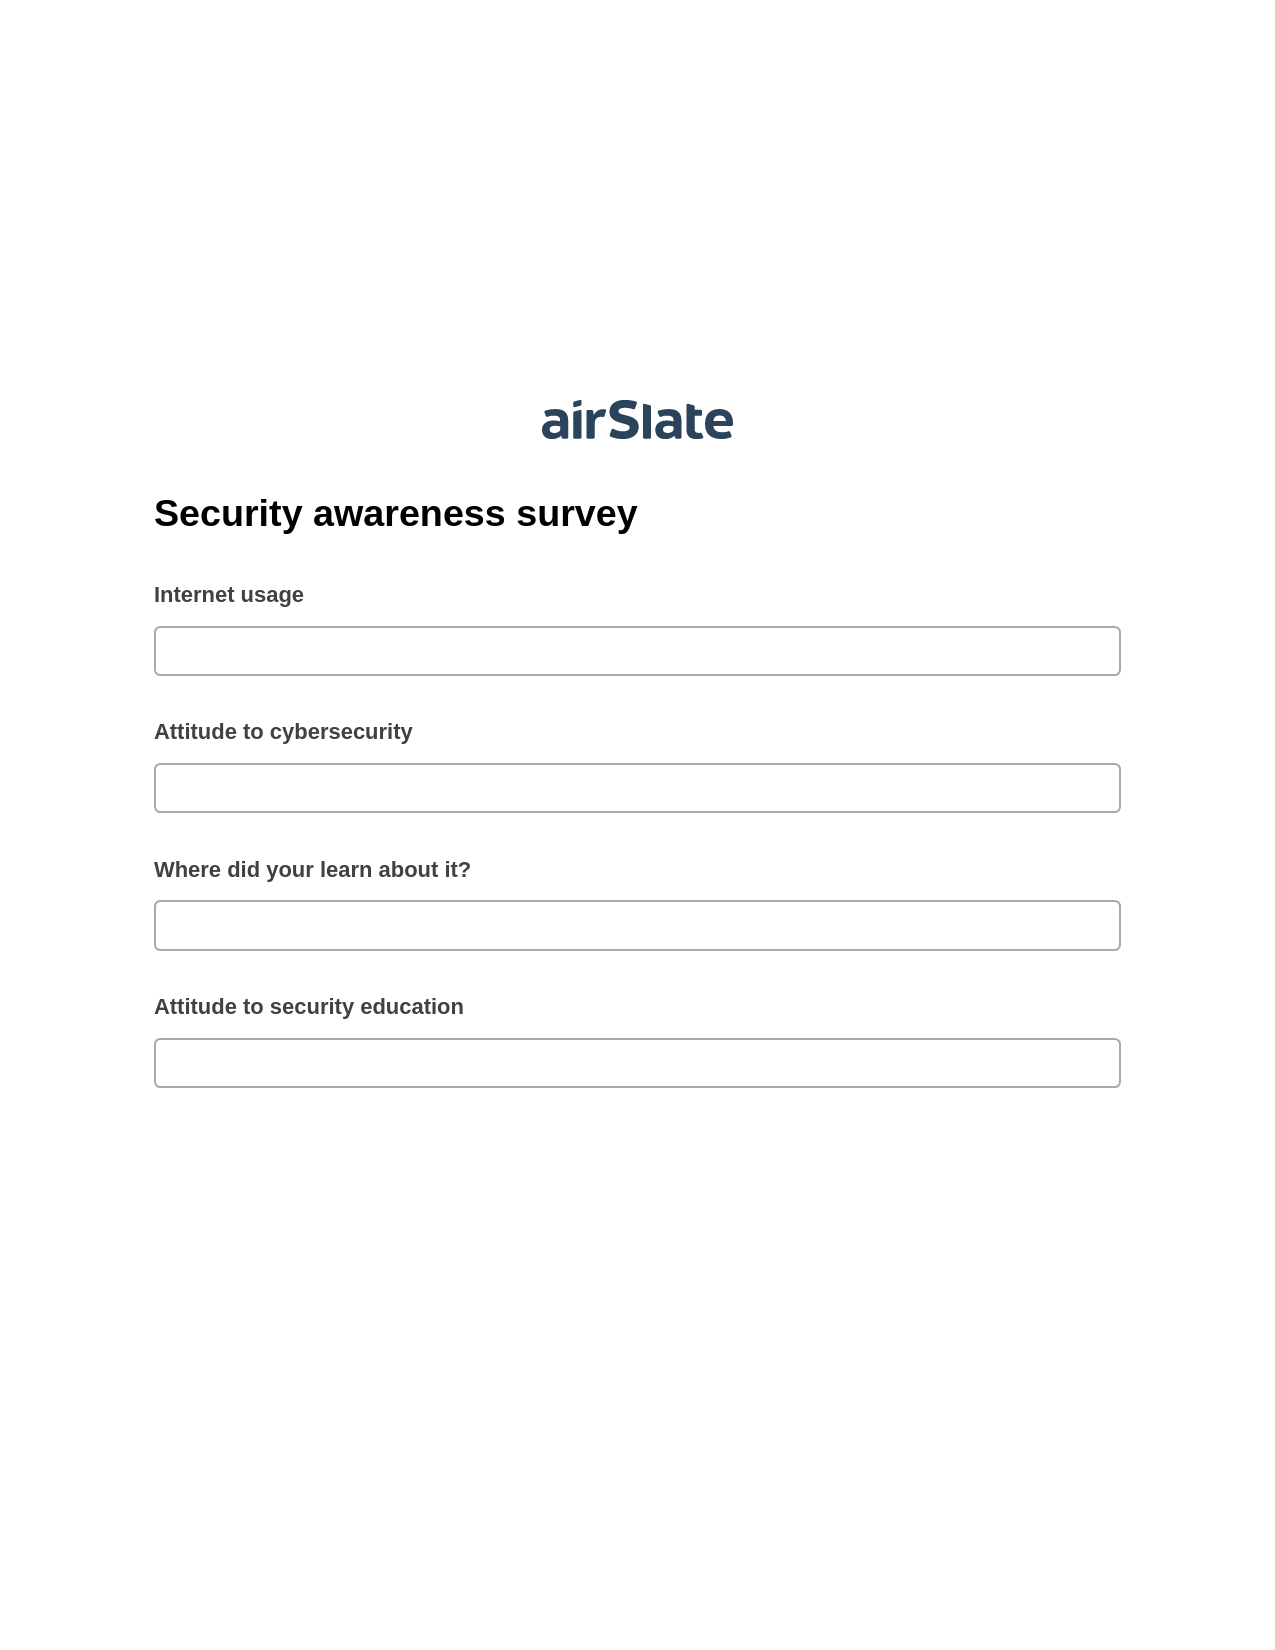 Multirole Security awareness survey Pre-fill from Salesforce Record Bot, Jira Bot, Dropbox Bot